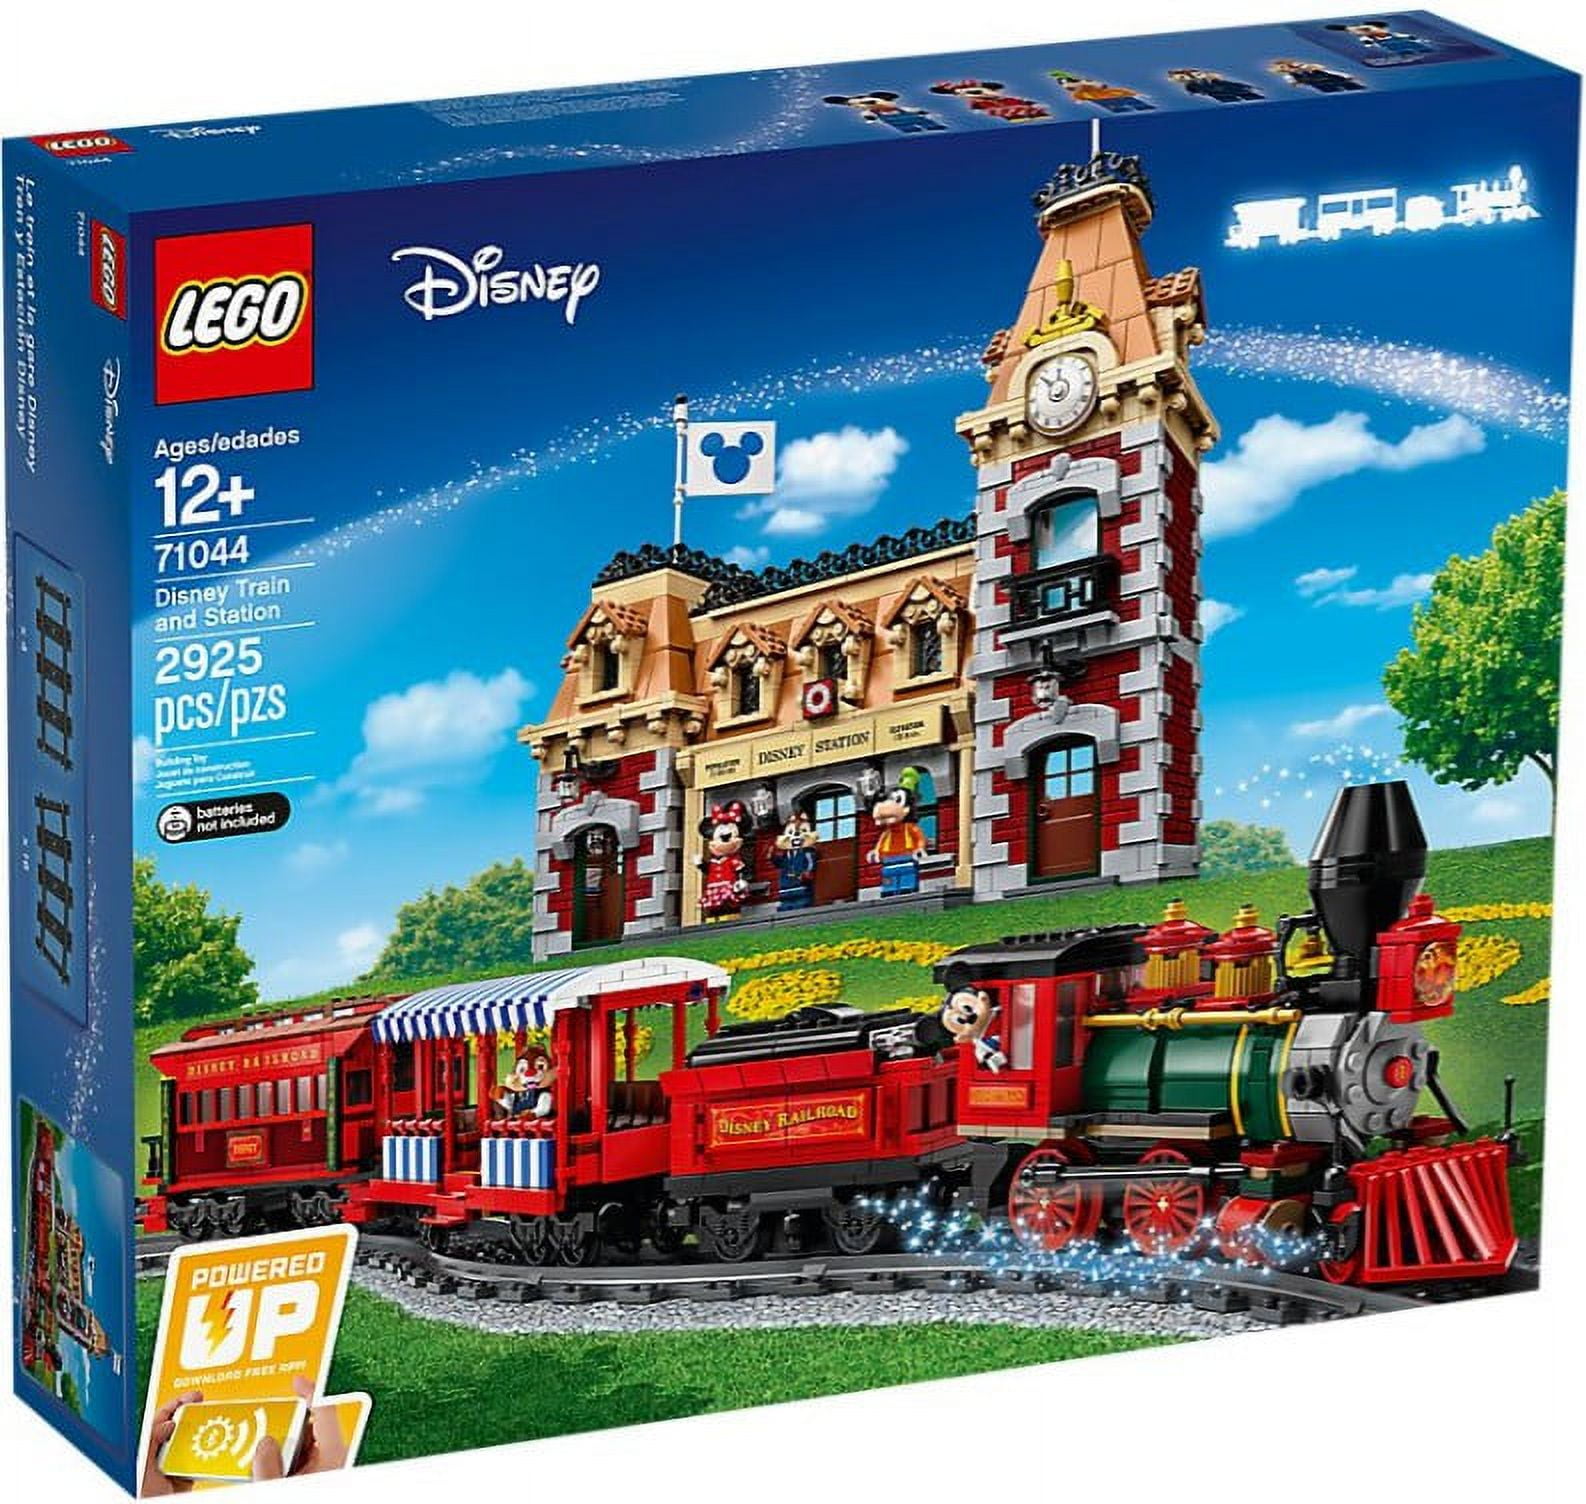 LEGO Disney Train and Station 71044 Building Set (2925 Pieces)